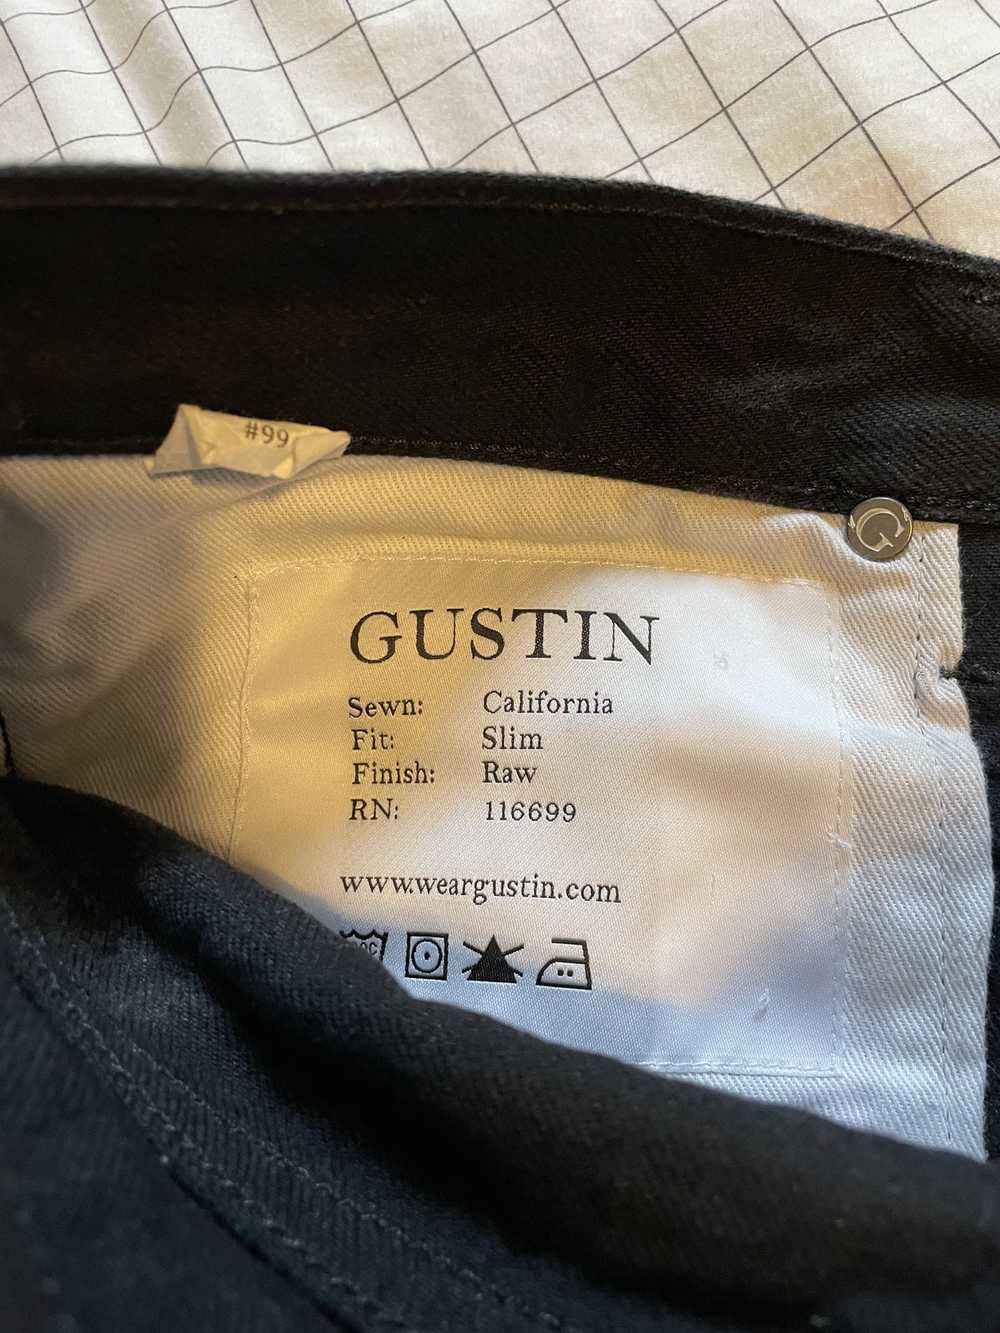 Gustin #99 Japan BlackXBlack Gustin Jeans - image 3